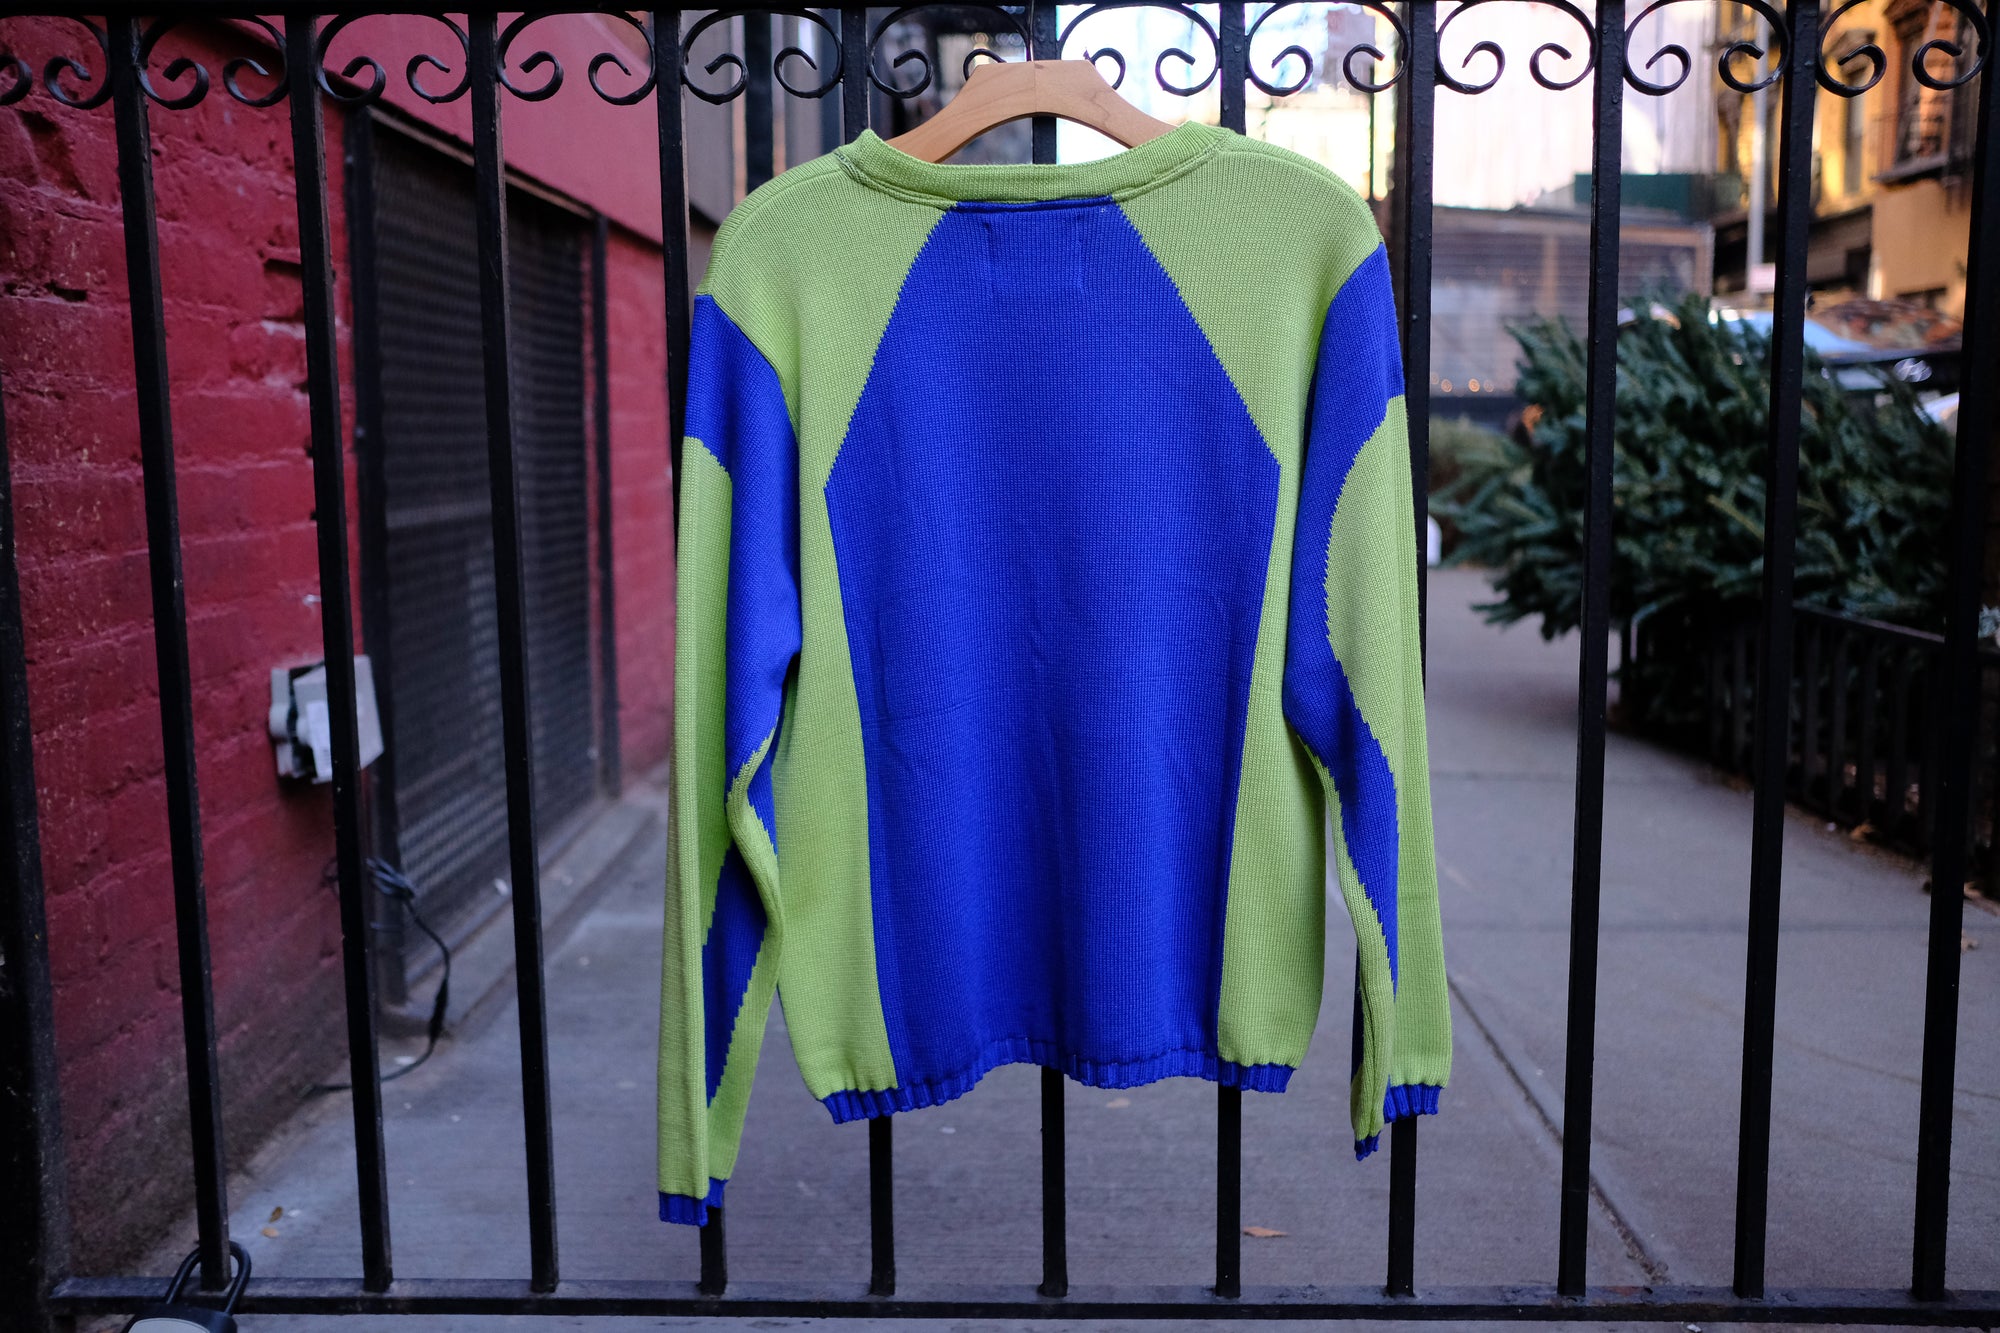 racer sweater in blue & green